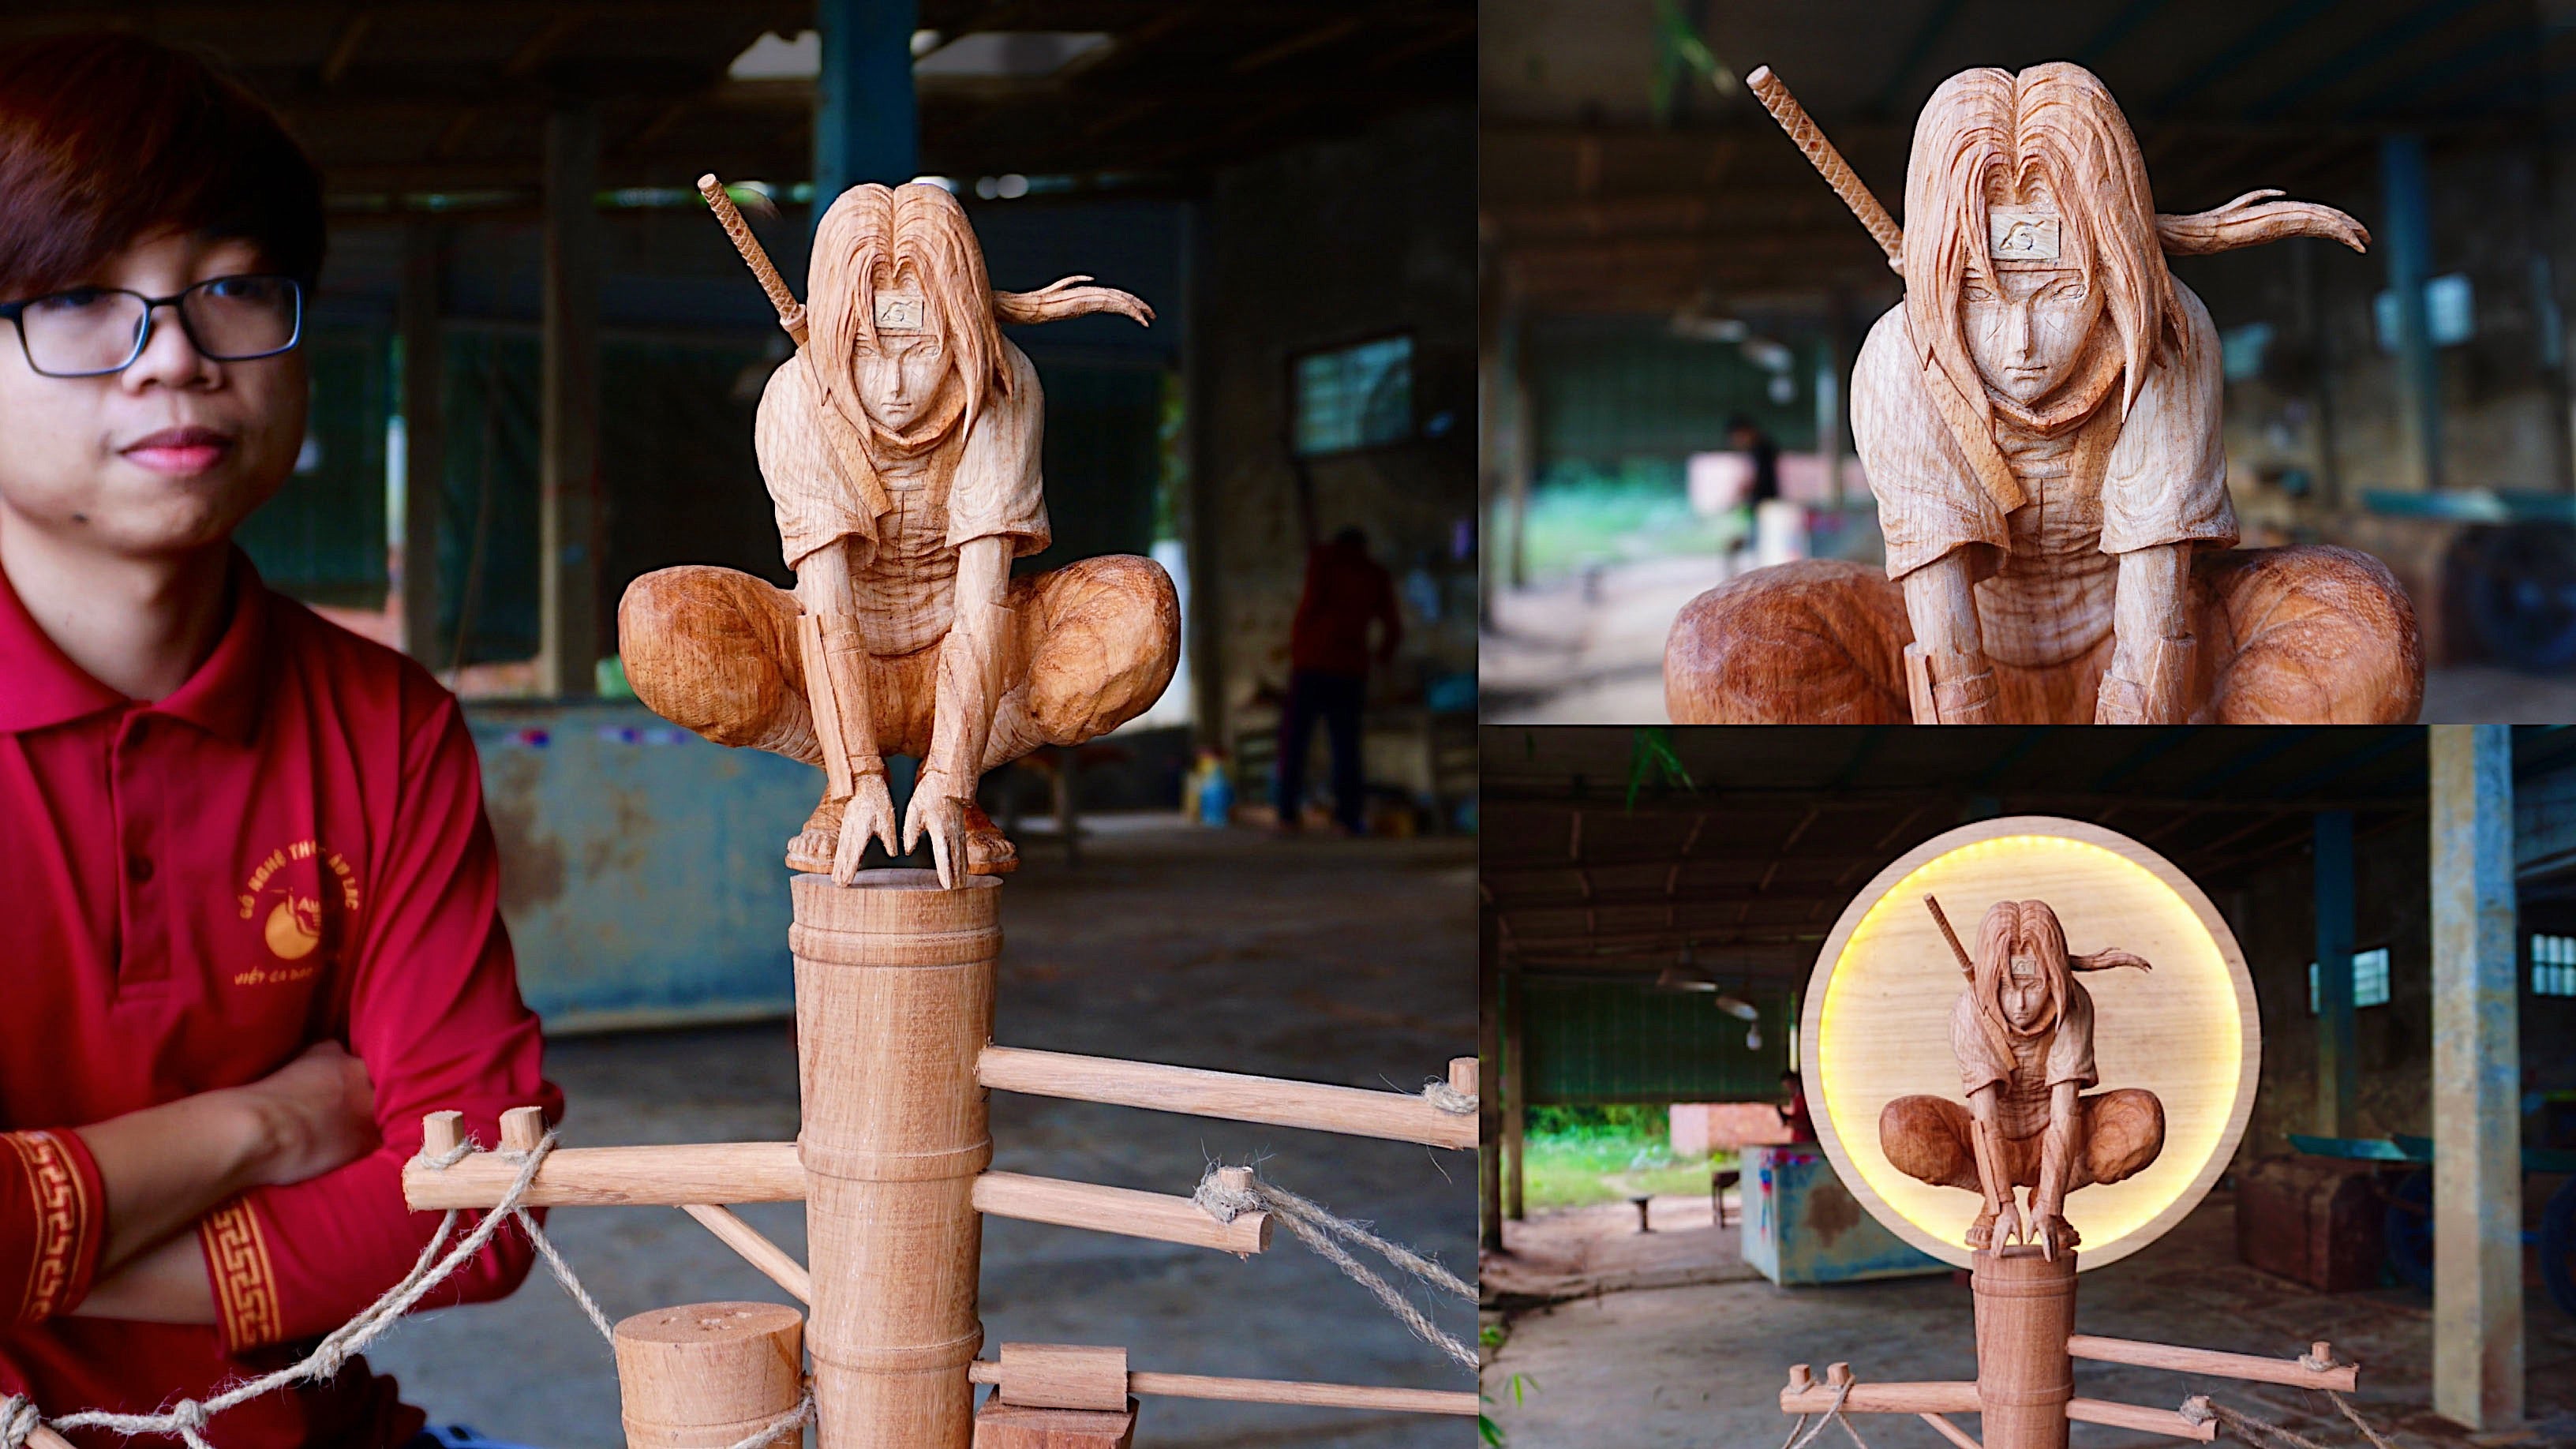 Itachi Uchiha - The Moonlight Figure Wood Carving - - Woodart Vietnam 